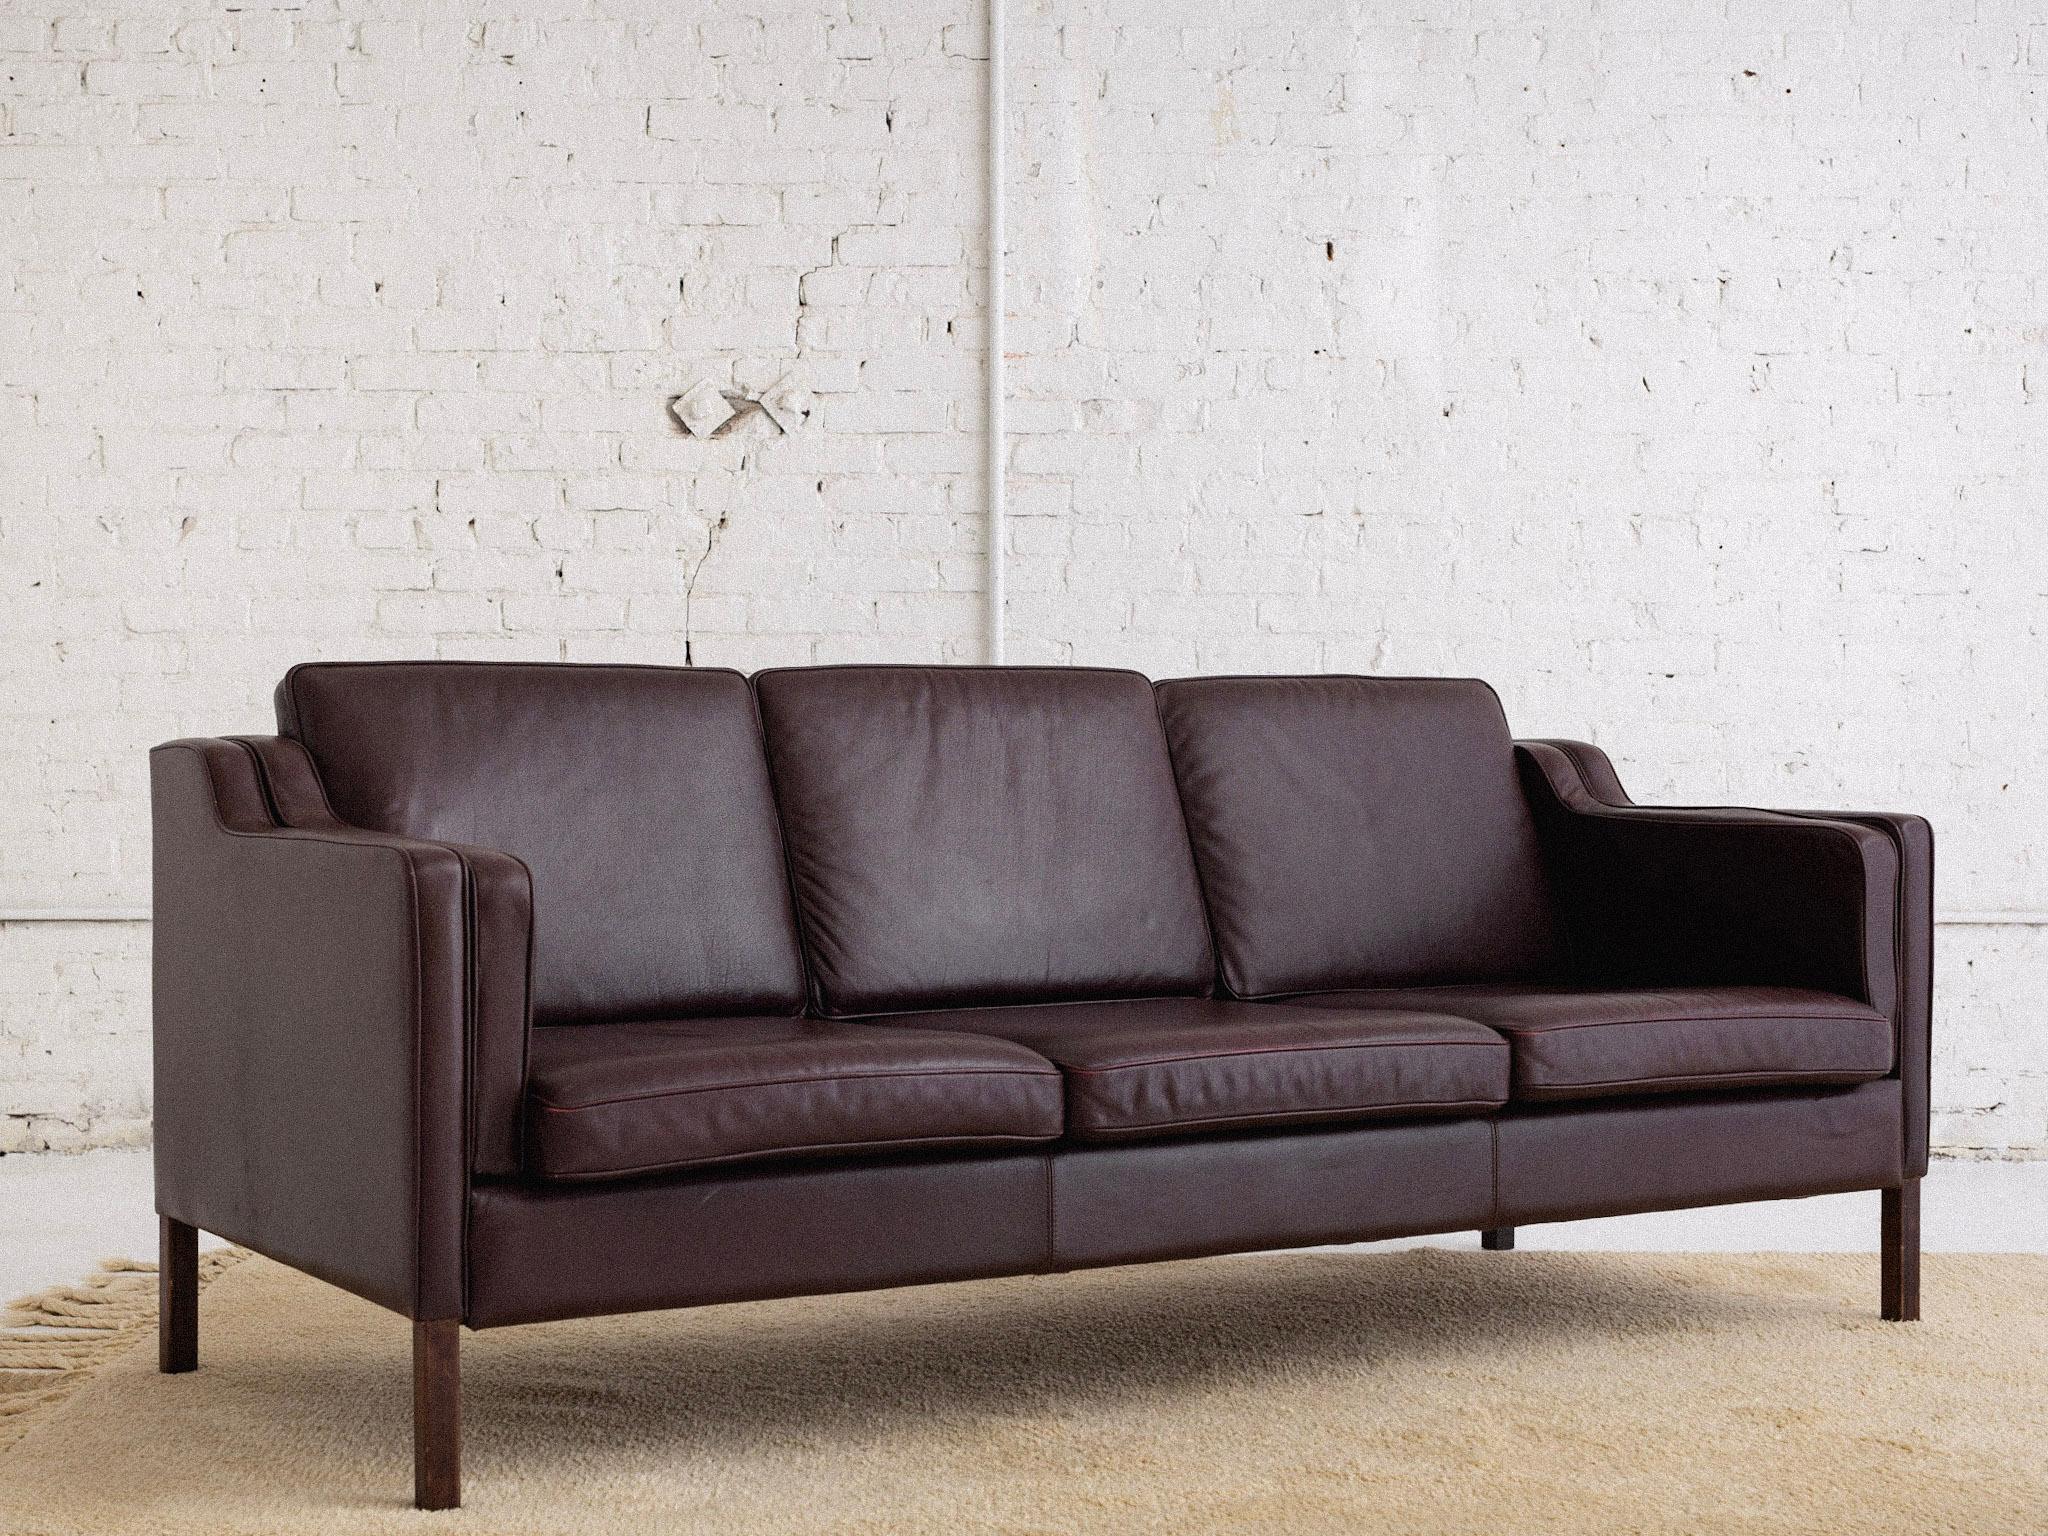 A Danish modern '2213' sofa by Børge Mogensen for Stouby. Original dark burgundy leather and 